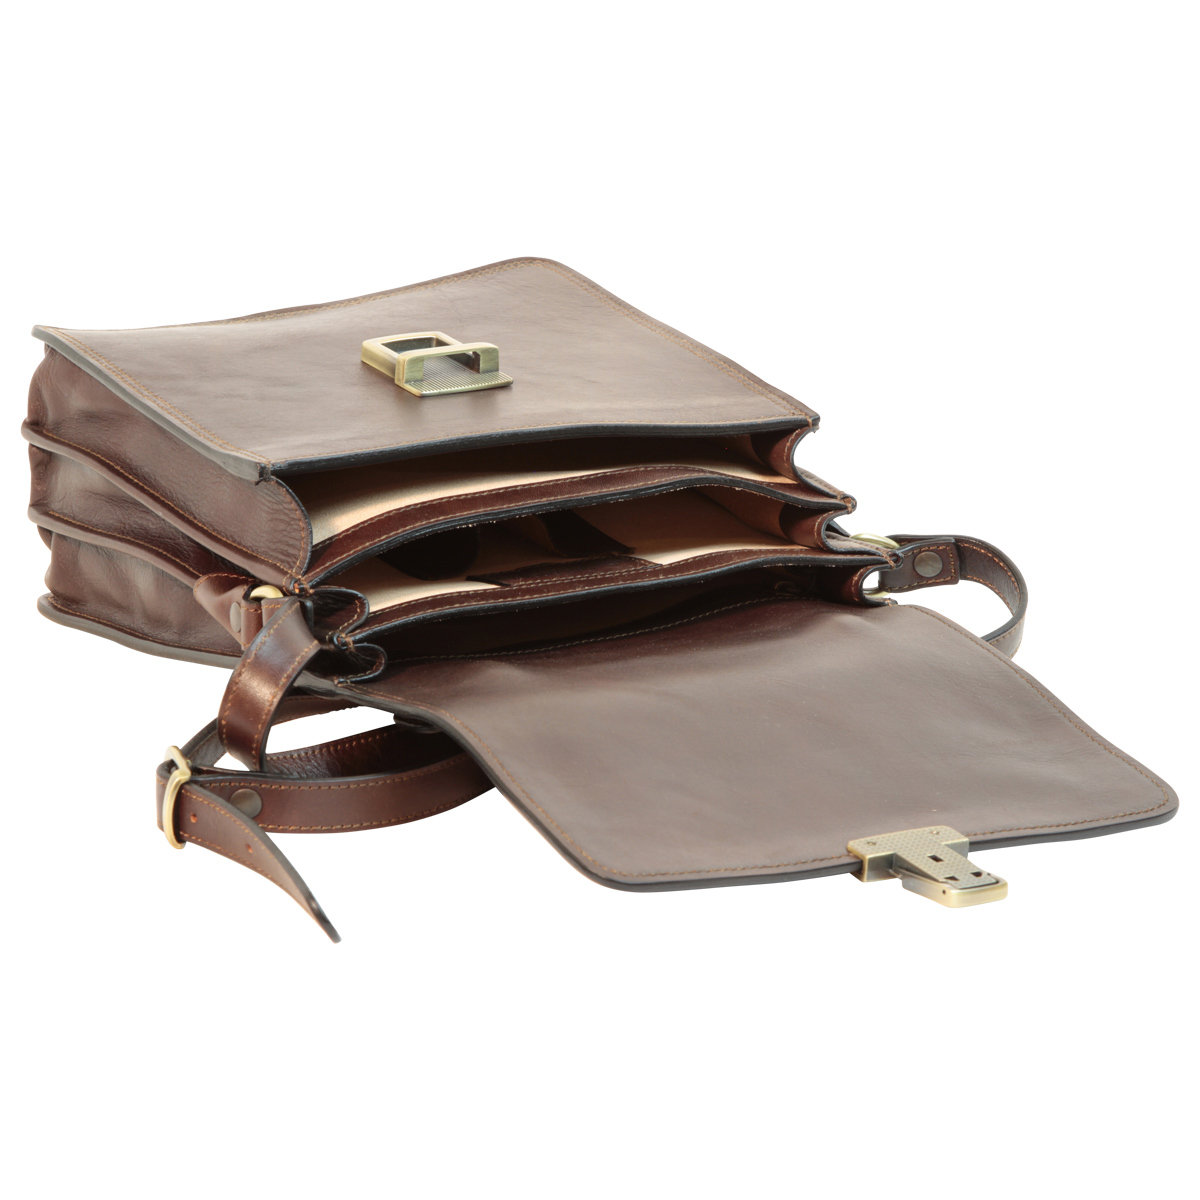 Leather Cross Body Satchel Bag - Dark Brown | 056589TM US | Old Angler Firenze